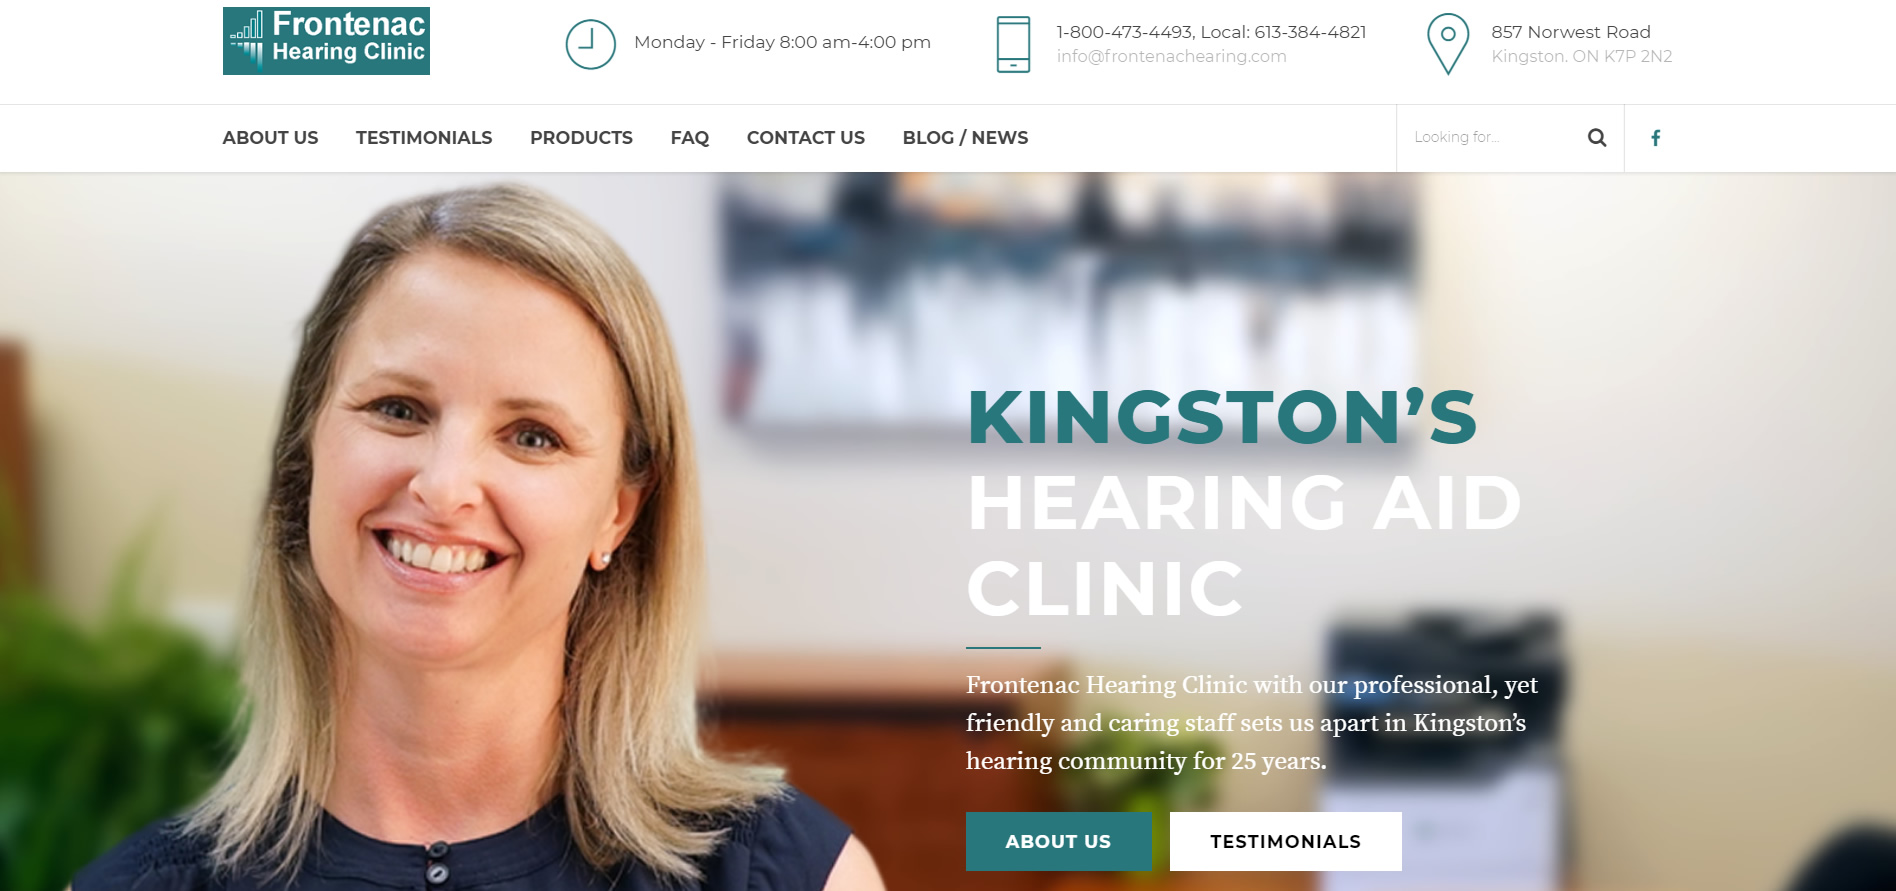 Frontenac Hearing Clinic - Kingston Ontario, design & web maintenance by 45 Degrees Latitude.